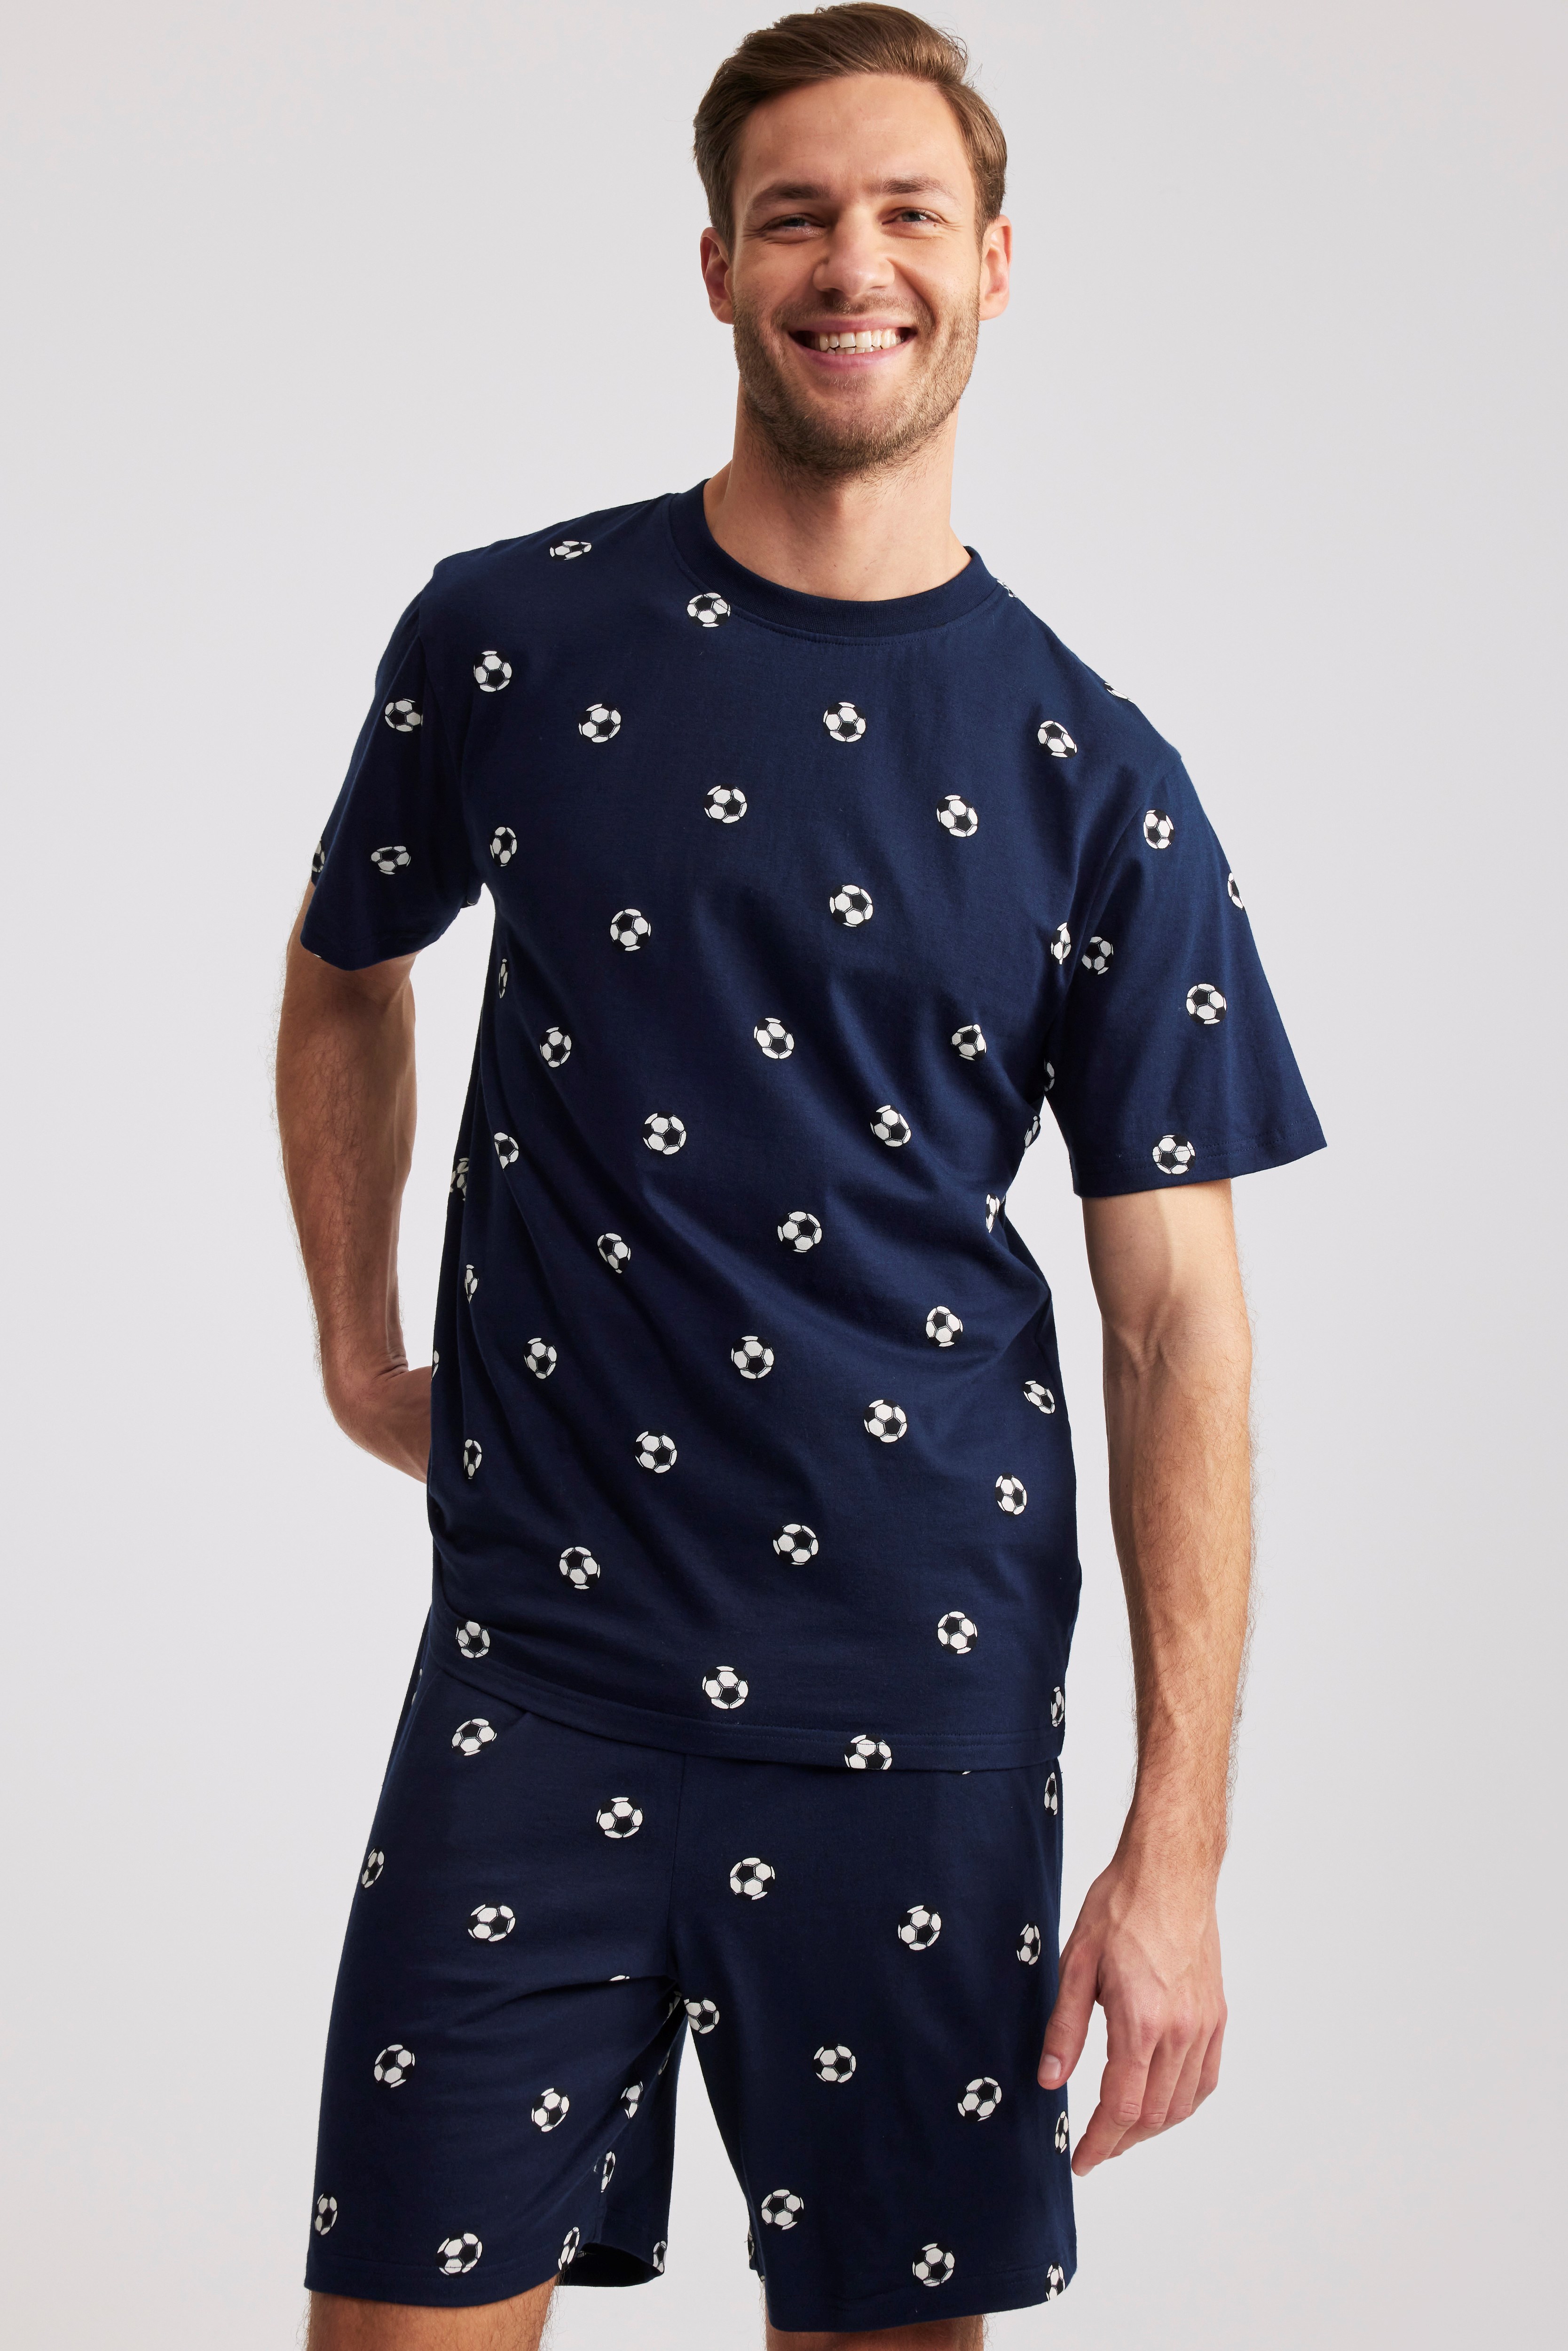 Peacocks Navy Football Short Pyjamas £9